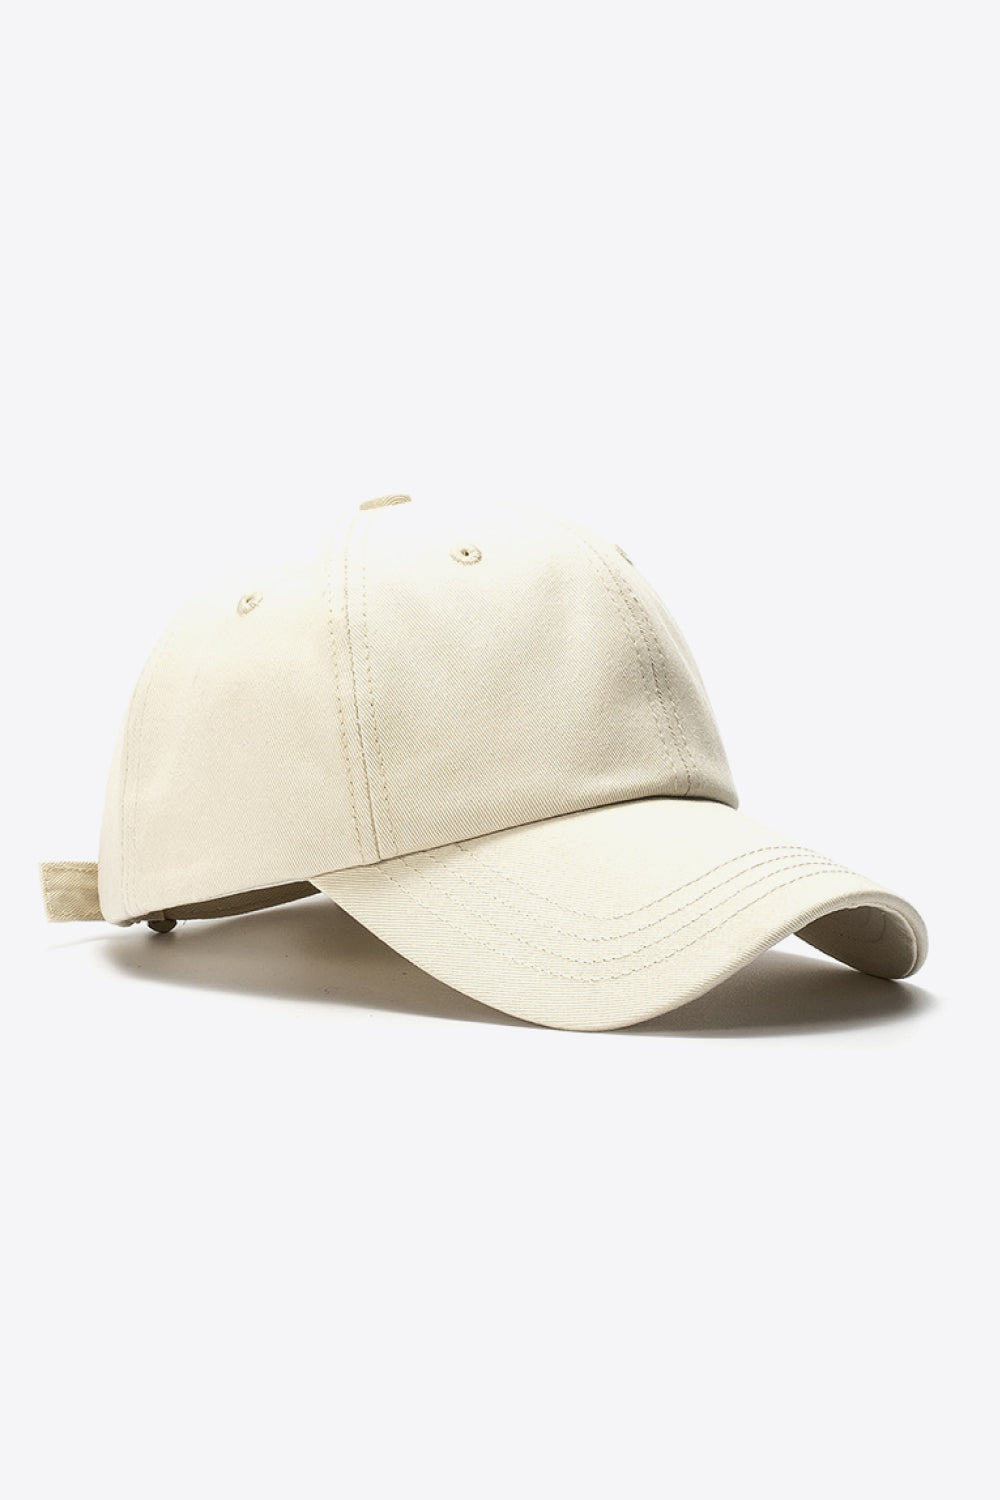 Cotton Baseball Hat white cream